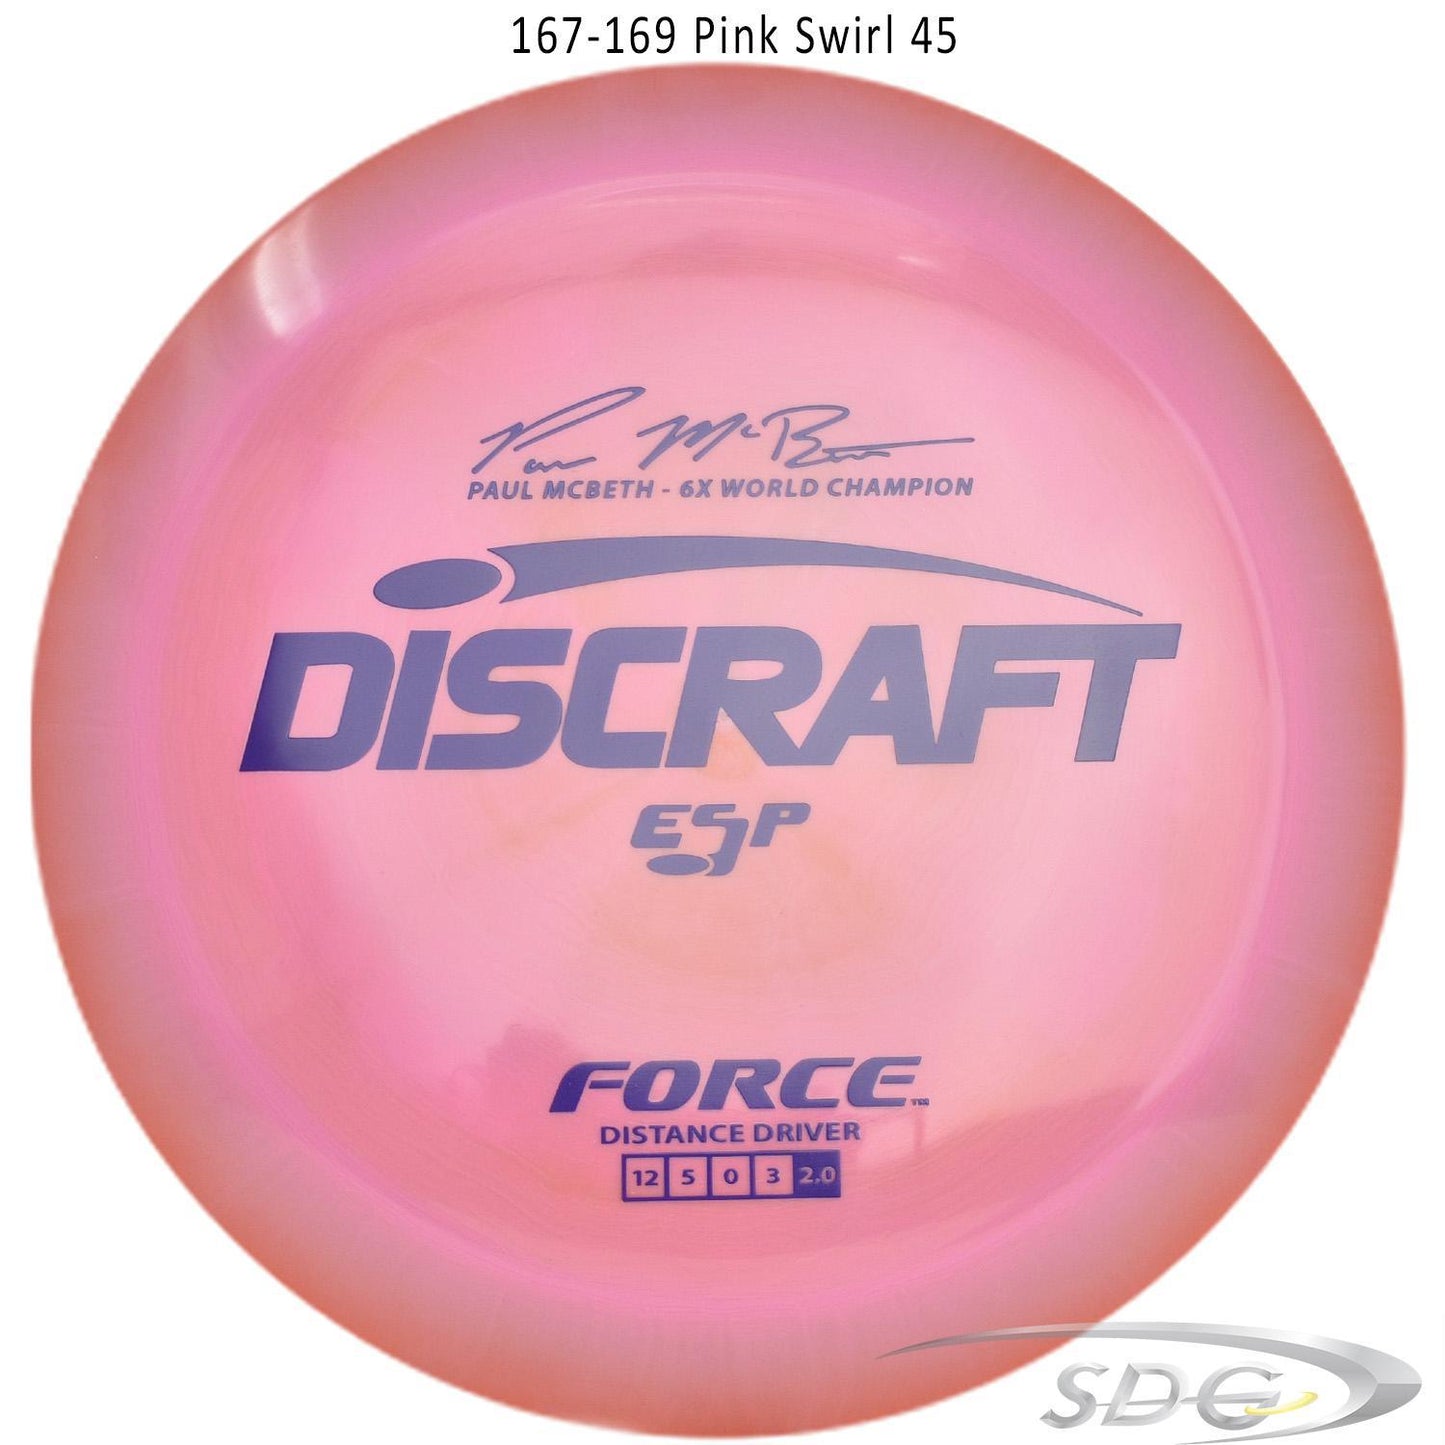 discraft-esp-force-6x-paul-mcbeth-signature-disc-golf-distance-driver 167-169 Pink Swirl 45